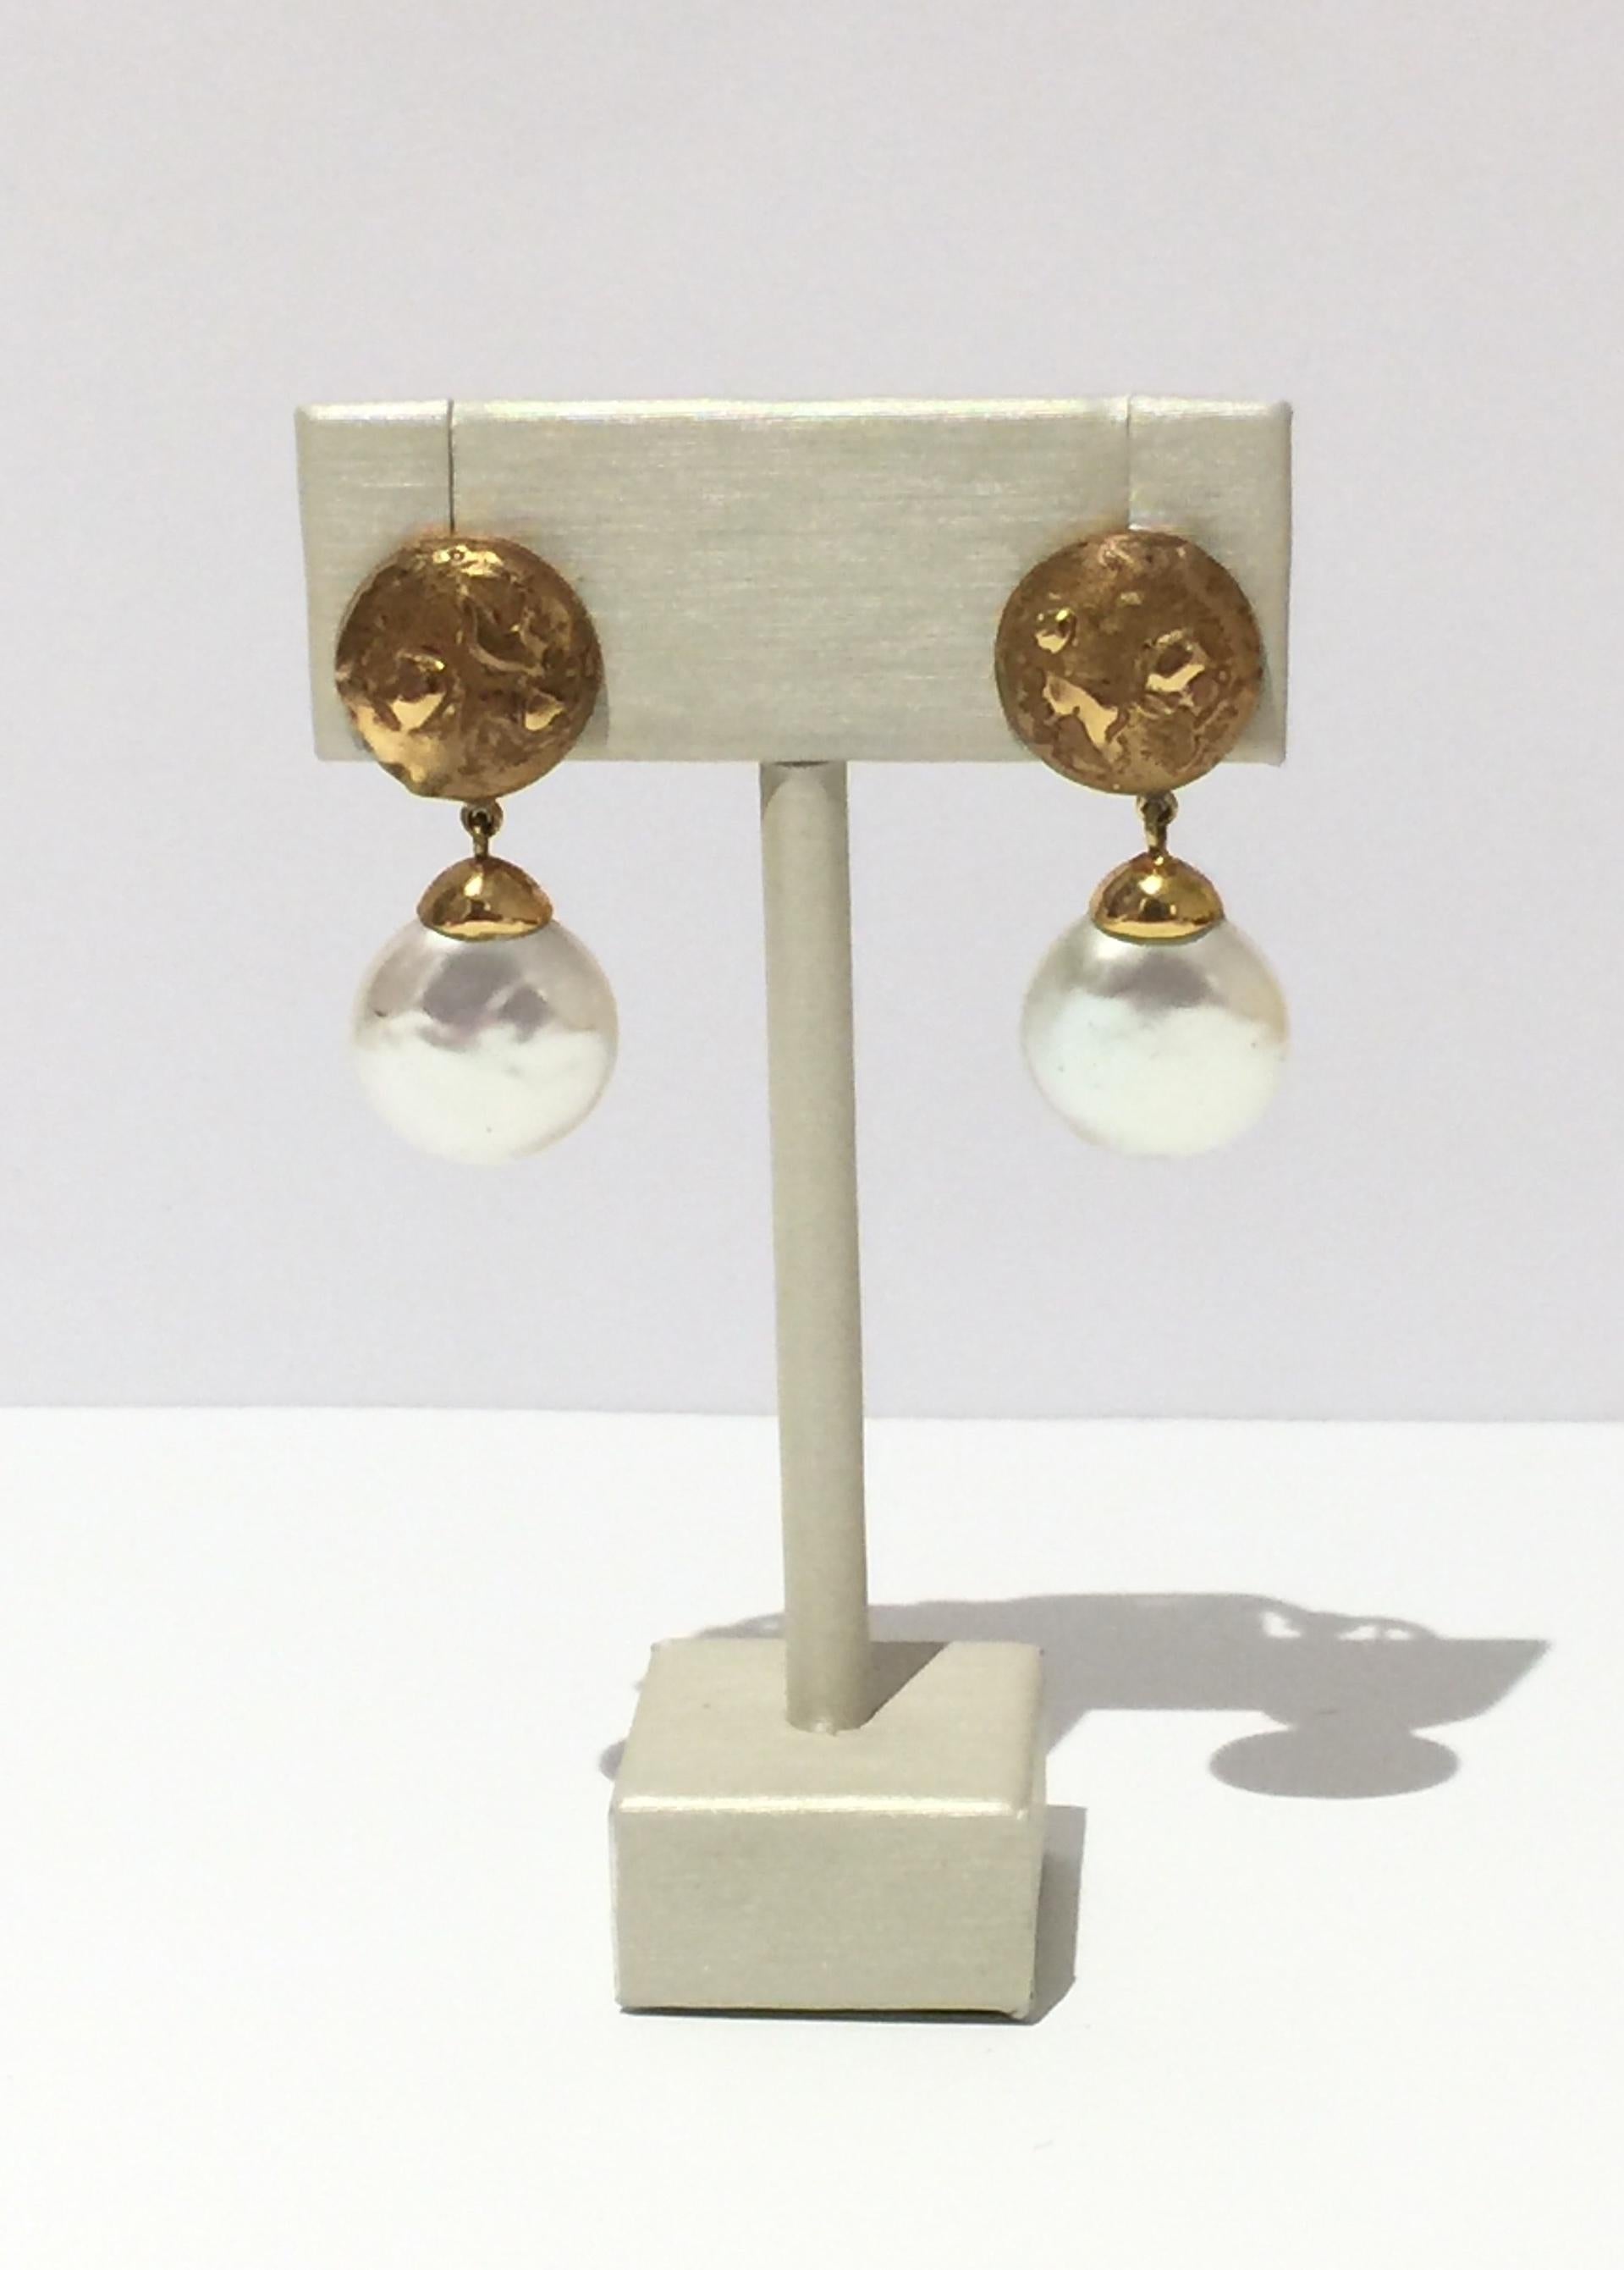 Yvel Pearl Earring.
18k Yellow Gold 
Freshwater Pearl 
E181Y
